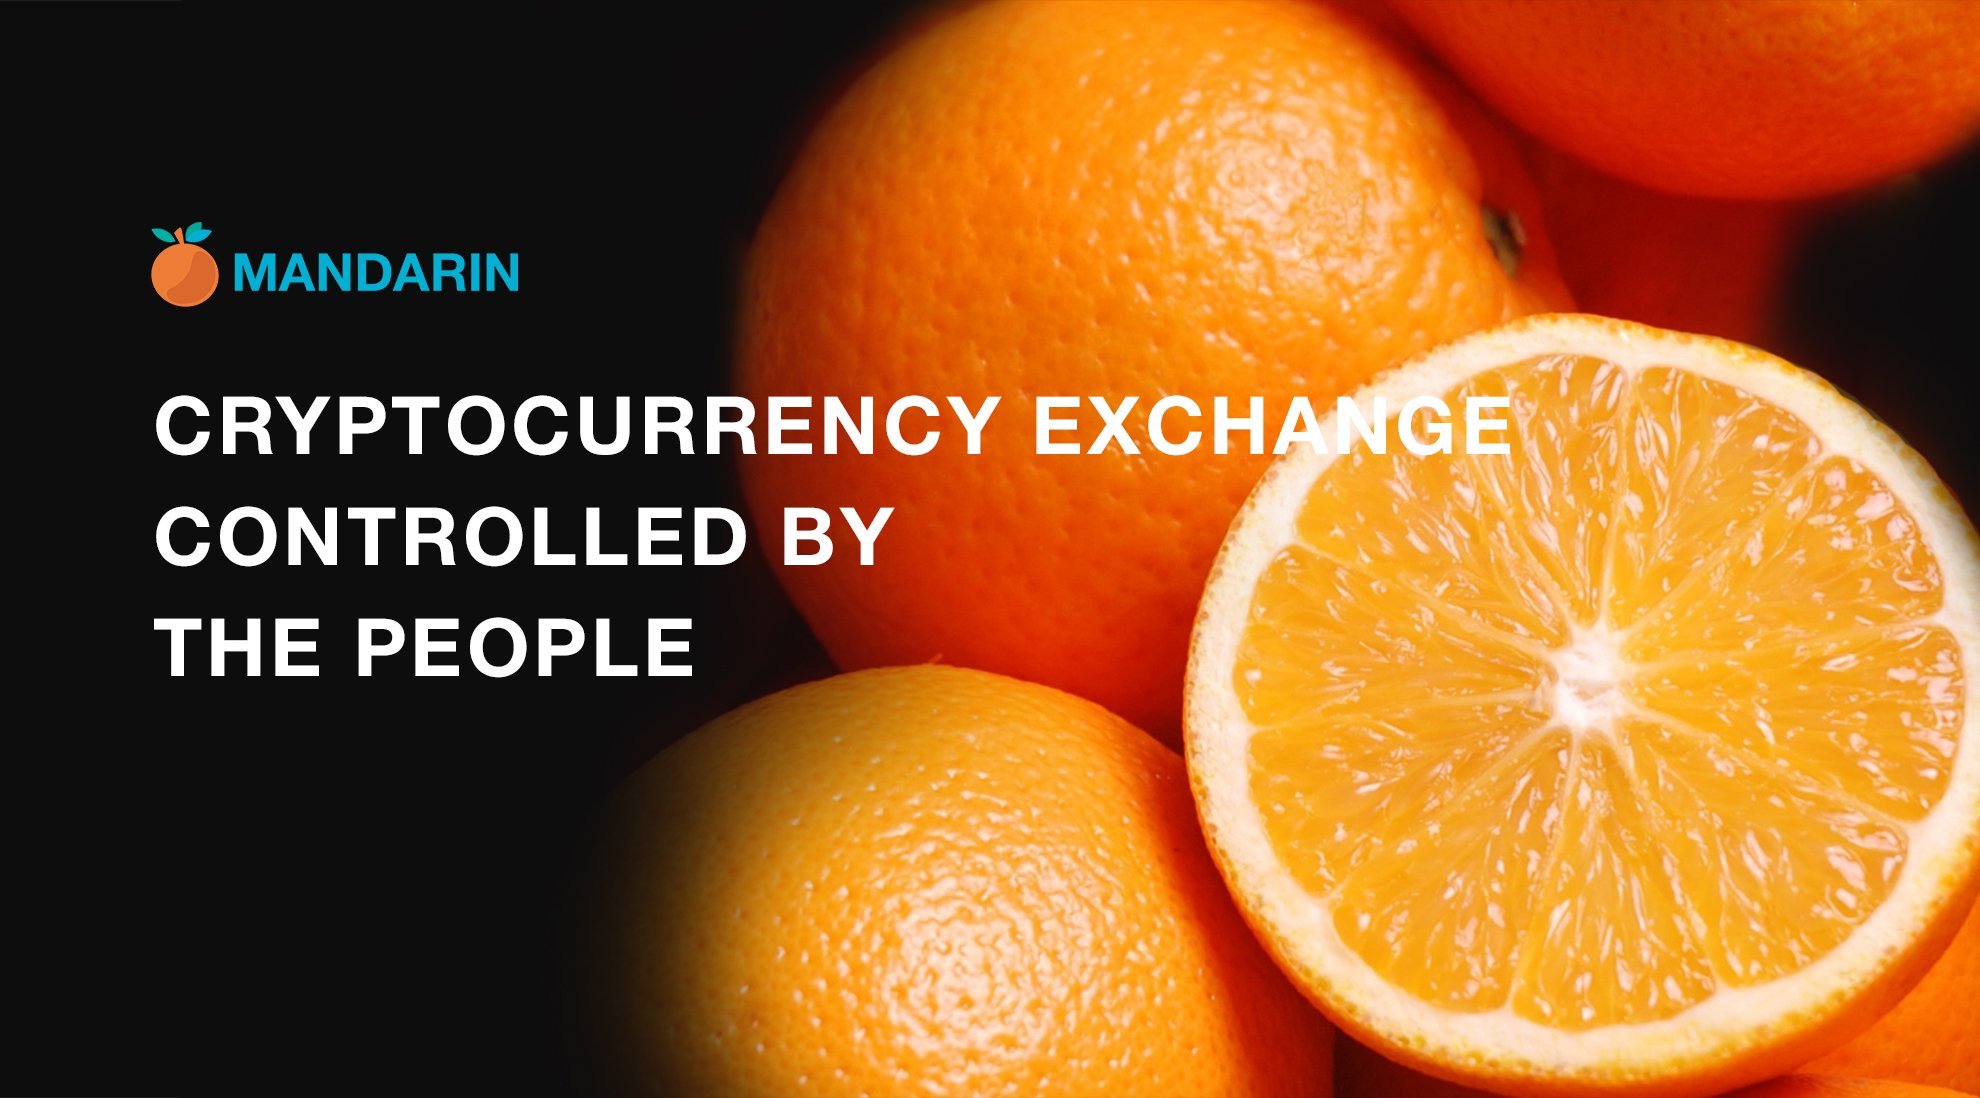 PR: Democratic Cryptocurrency Exchange Mandarin.top launched ICO